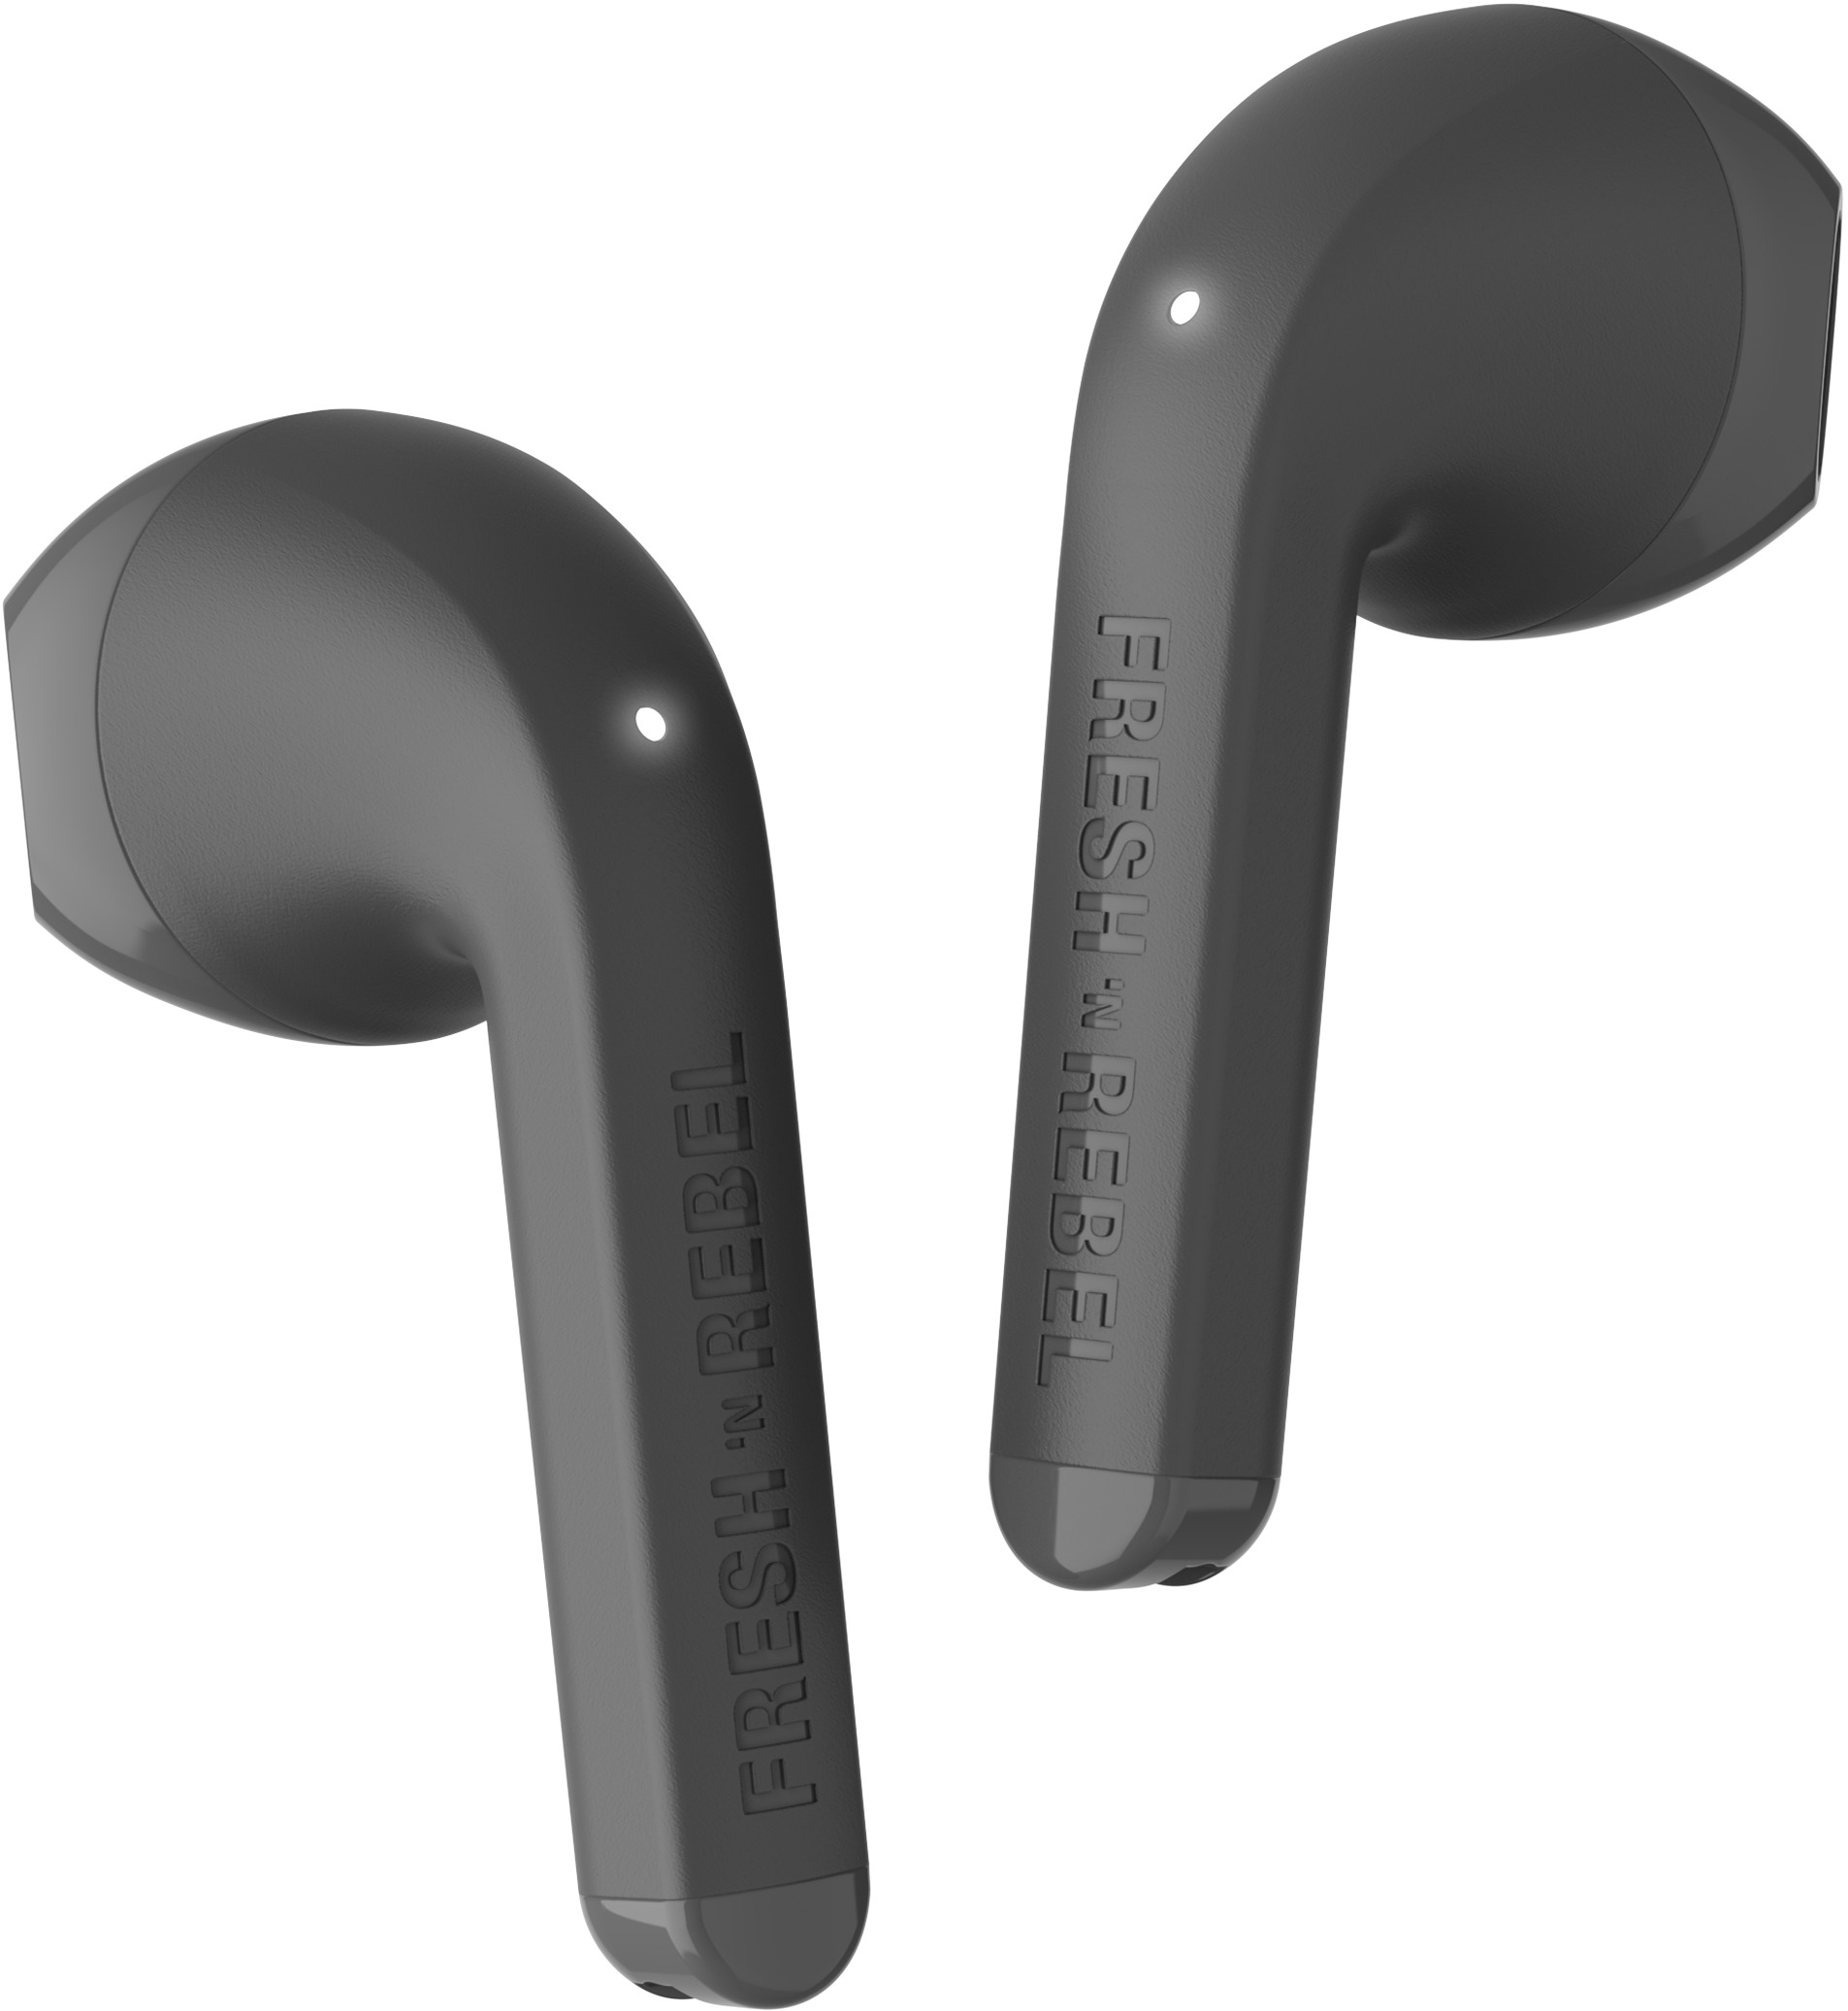 FRESH'N REBEL Twins Core - TWS earbuds 3TW1200SG Storm Grey